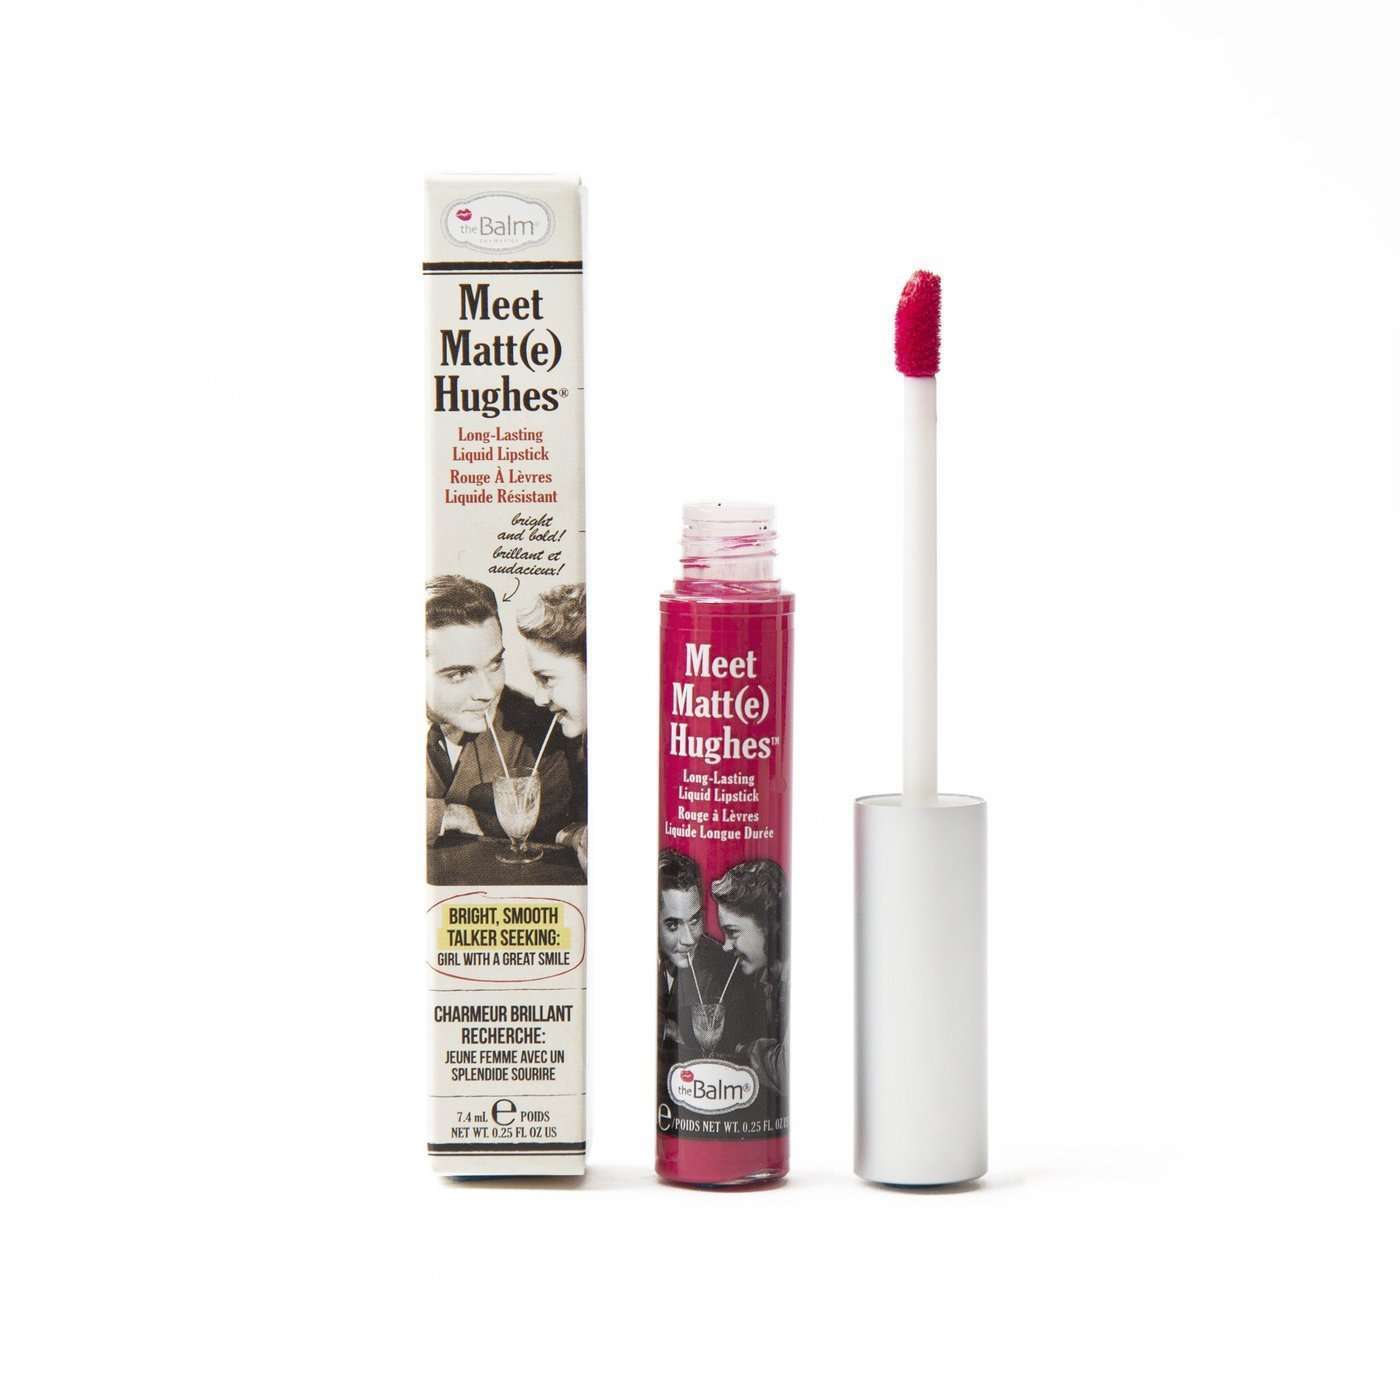 The Balm Cosmetics Meet Matte(e) Hughes Liquid LipstickSentimentalorabelca